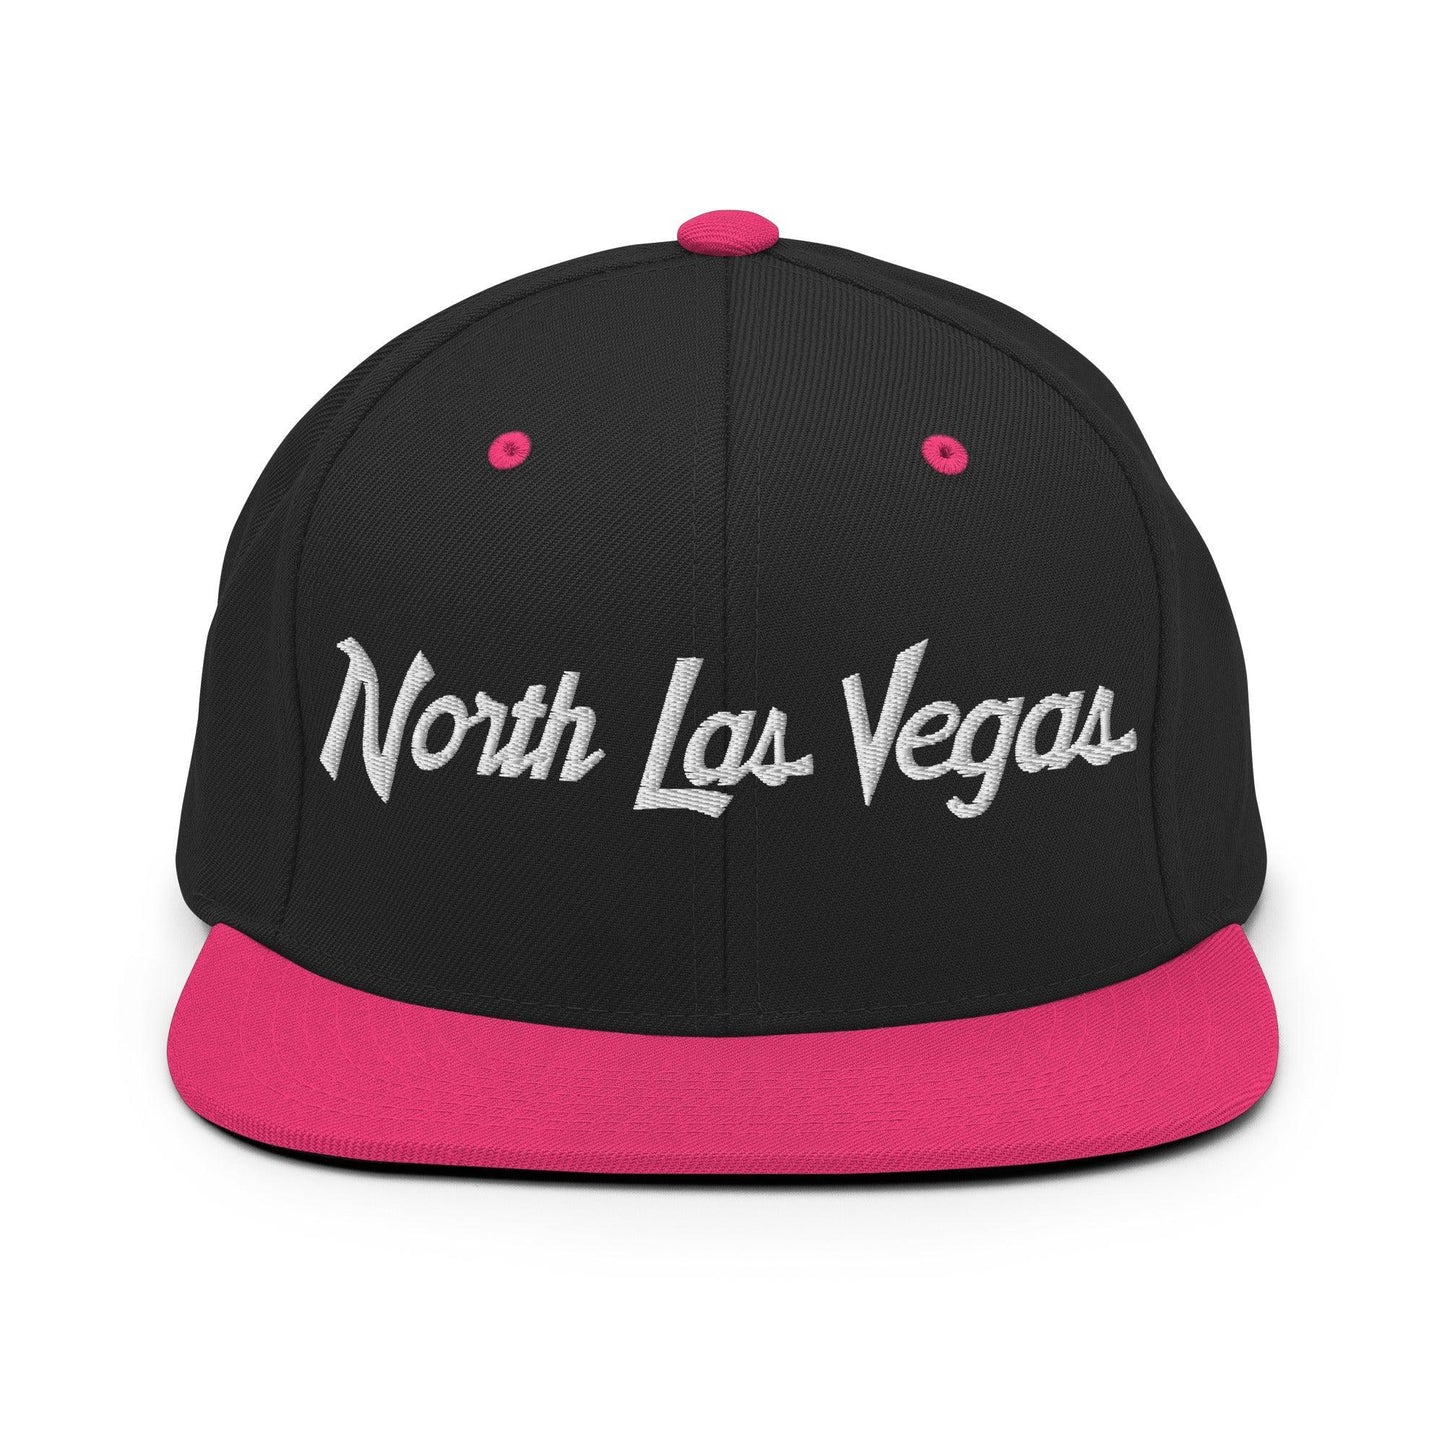 North Las Vegas Script Snapback Hat Black Neon Pink